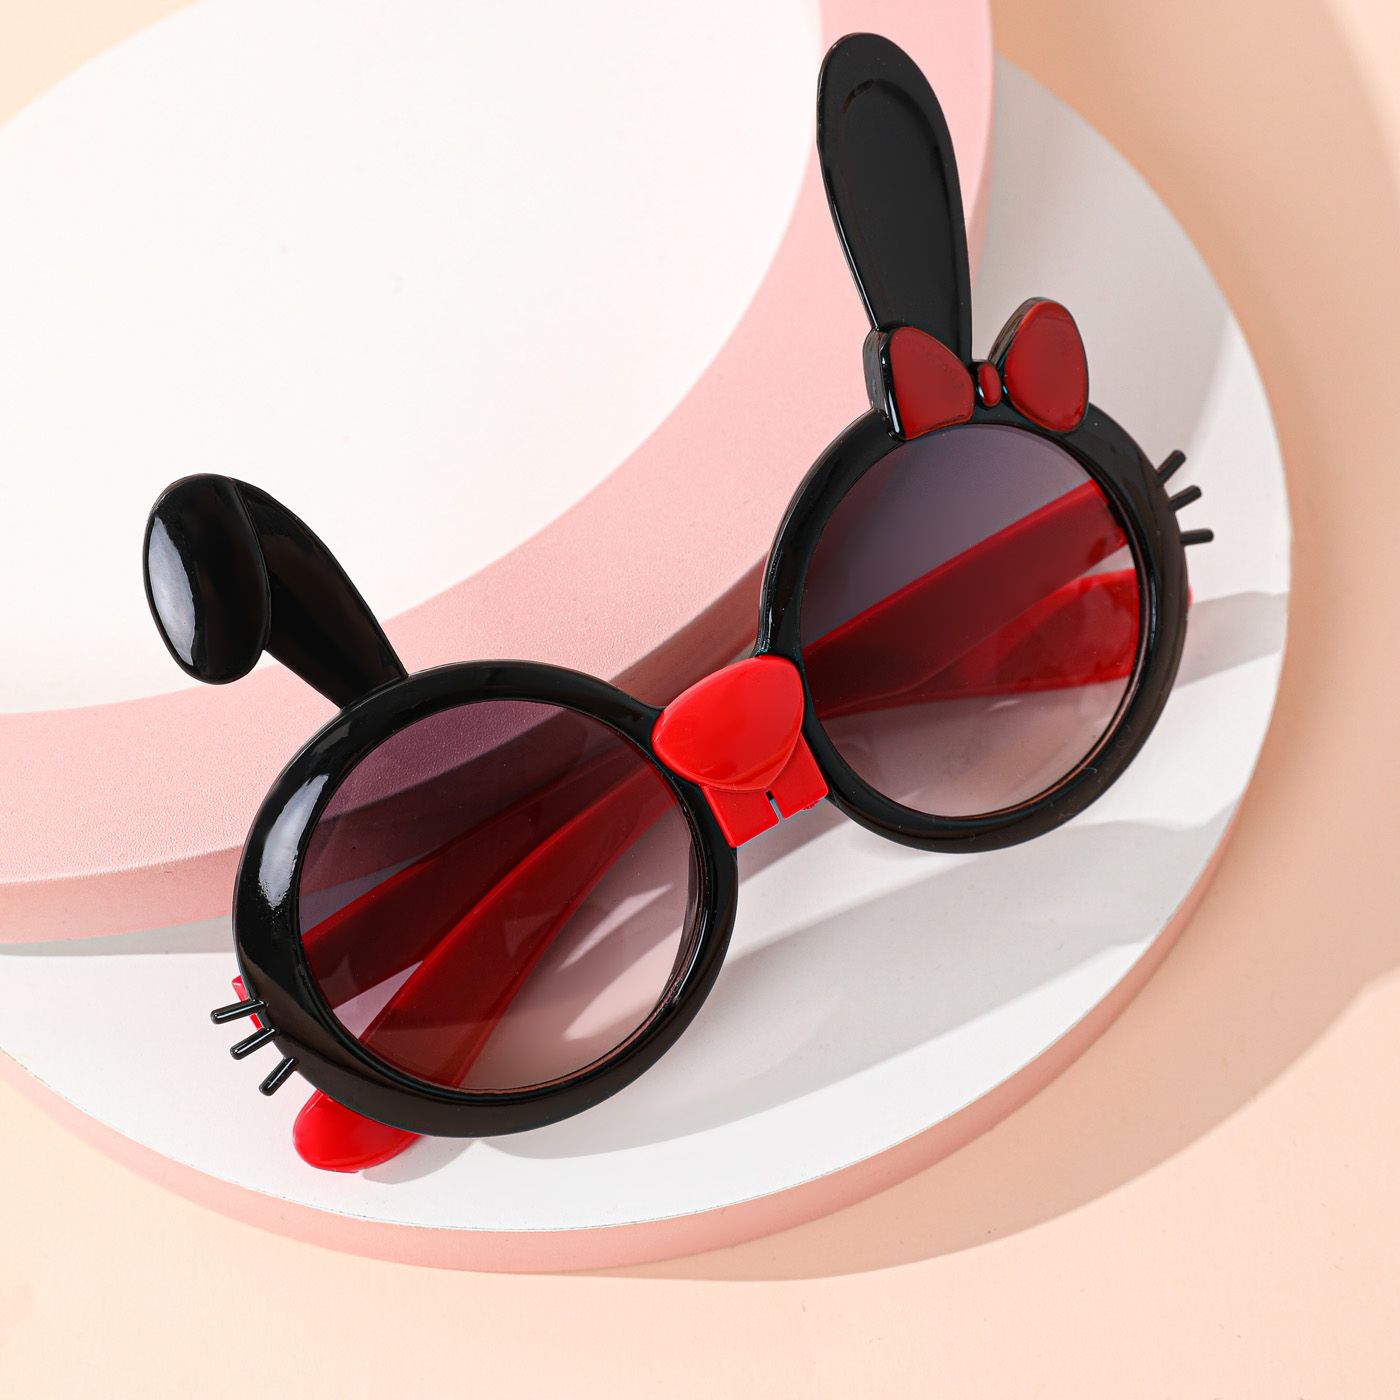 Toddler / Kid Cartoon Creative Rabbit Bunny Ears Decorative Glasses